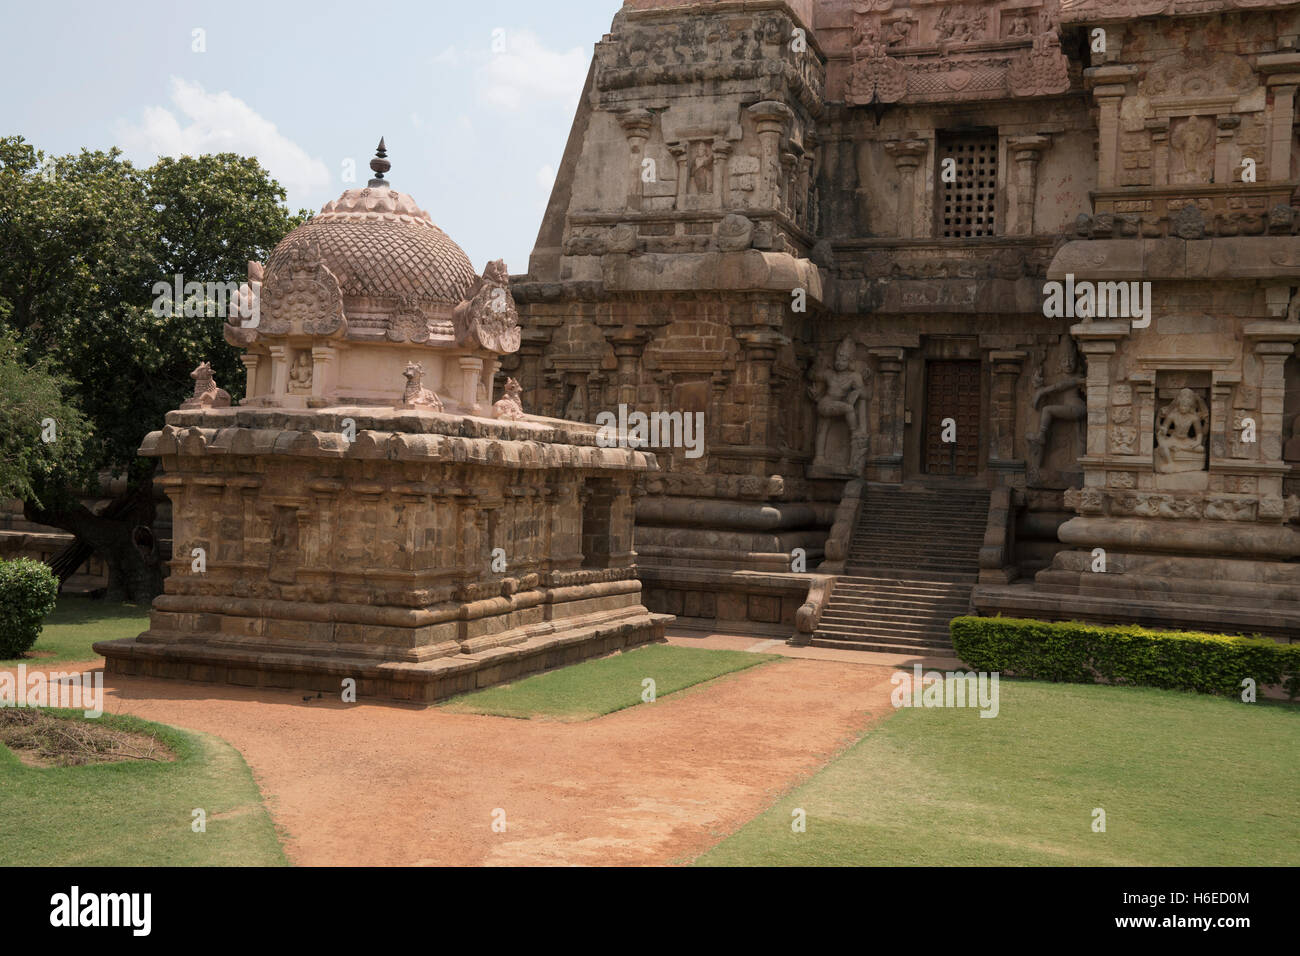 Chandykesvara de culte et entrée nord de l'mukhamandapa, Temple de Brihadisvara, Gangaikondacholapuram, Tamil Nadu, Inde. Banque D'Images